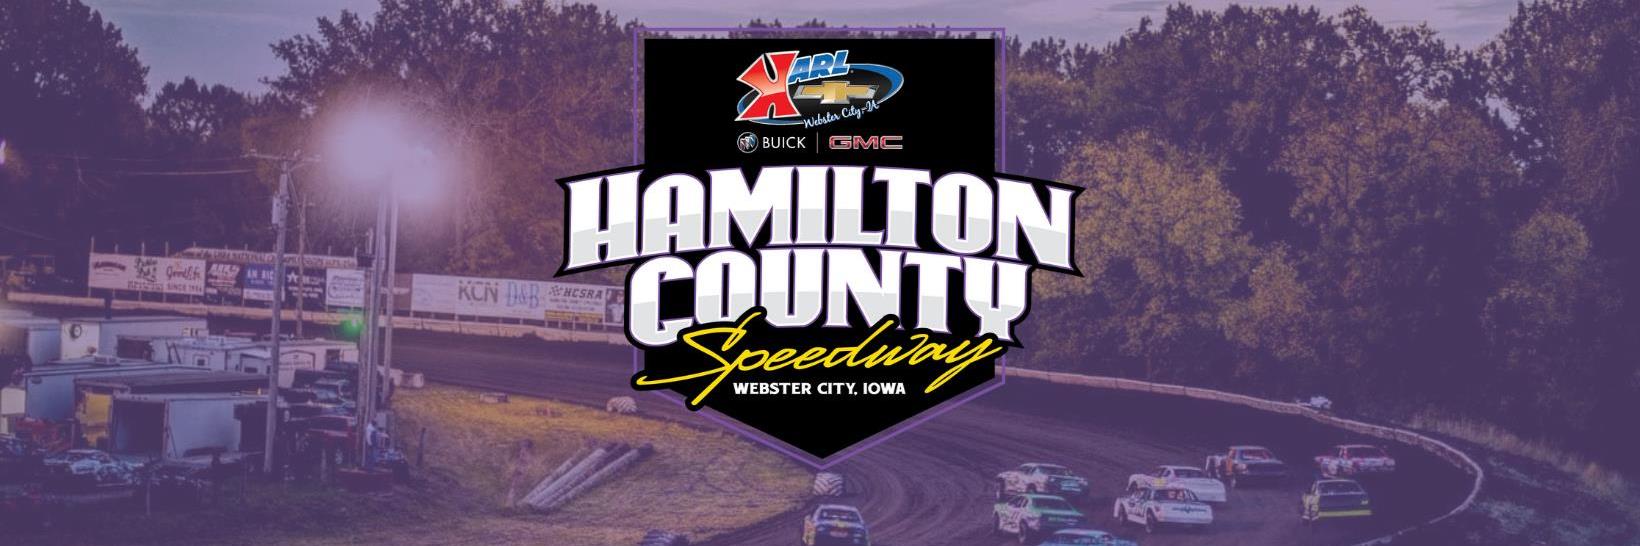 5/9/2017 - Hamilton County Speedway